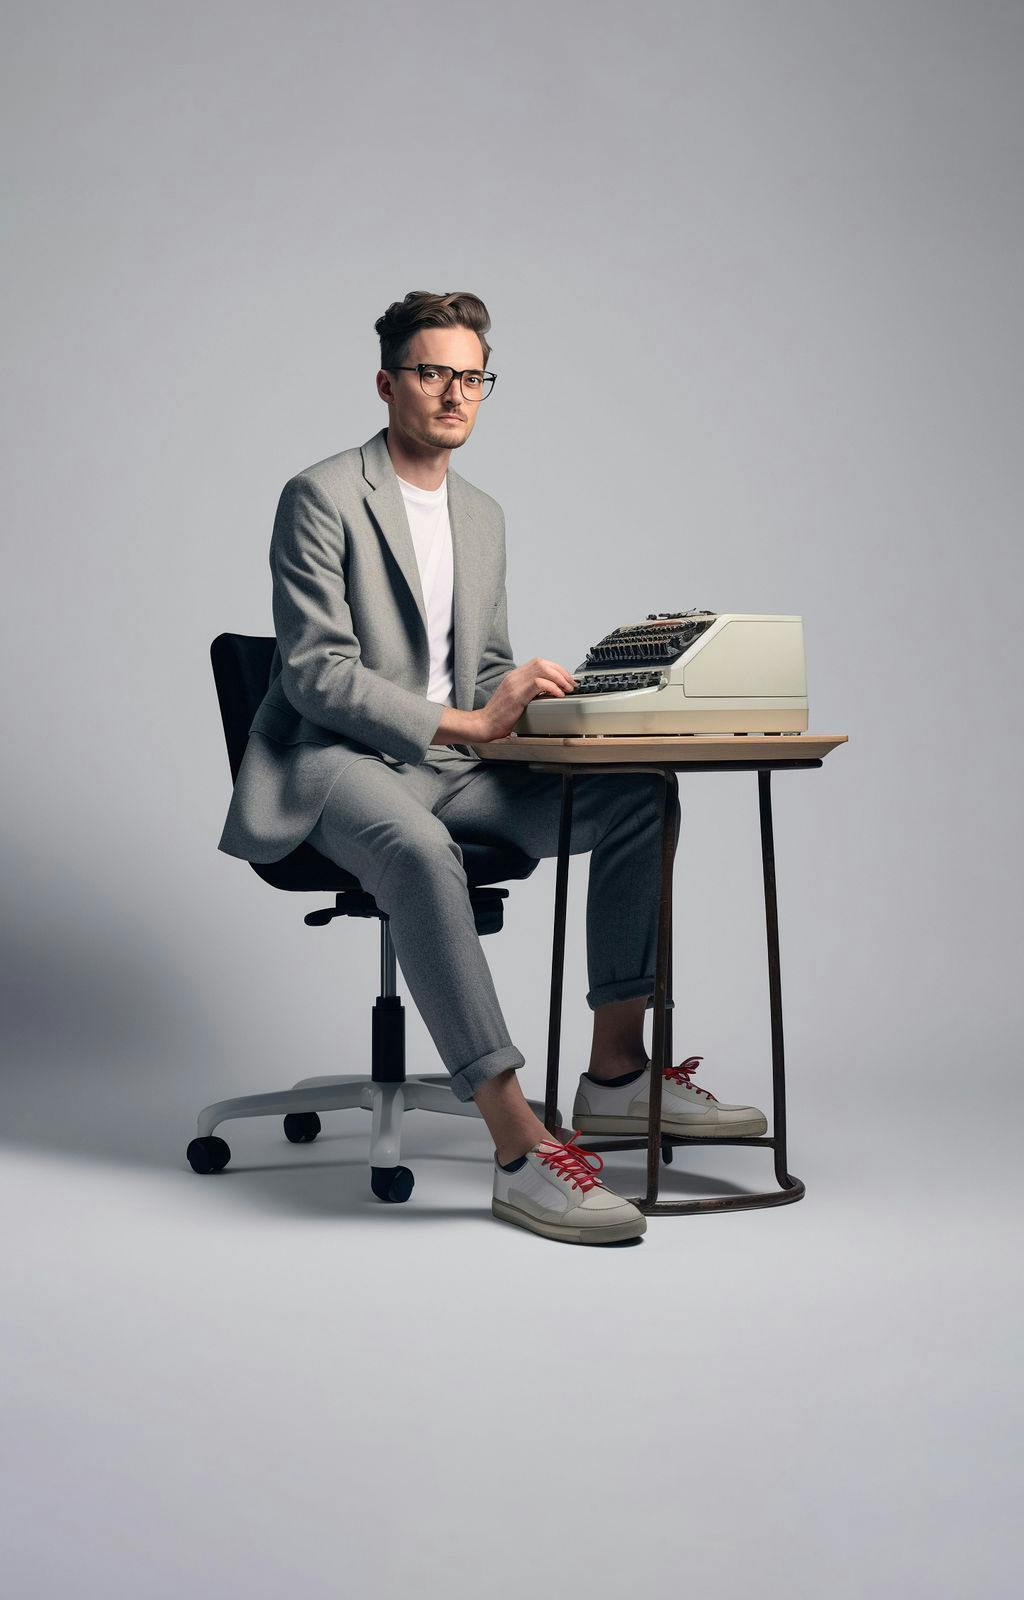 Man met bril in pak met sneakers zit aan een kleine tafel met oude typewriter.